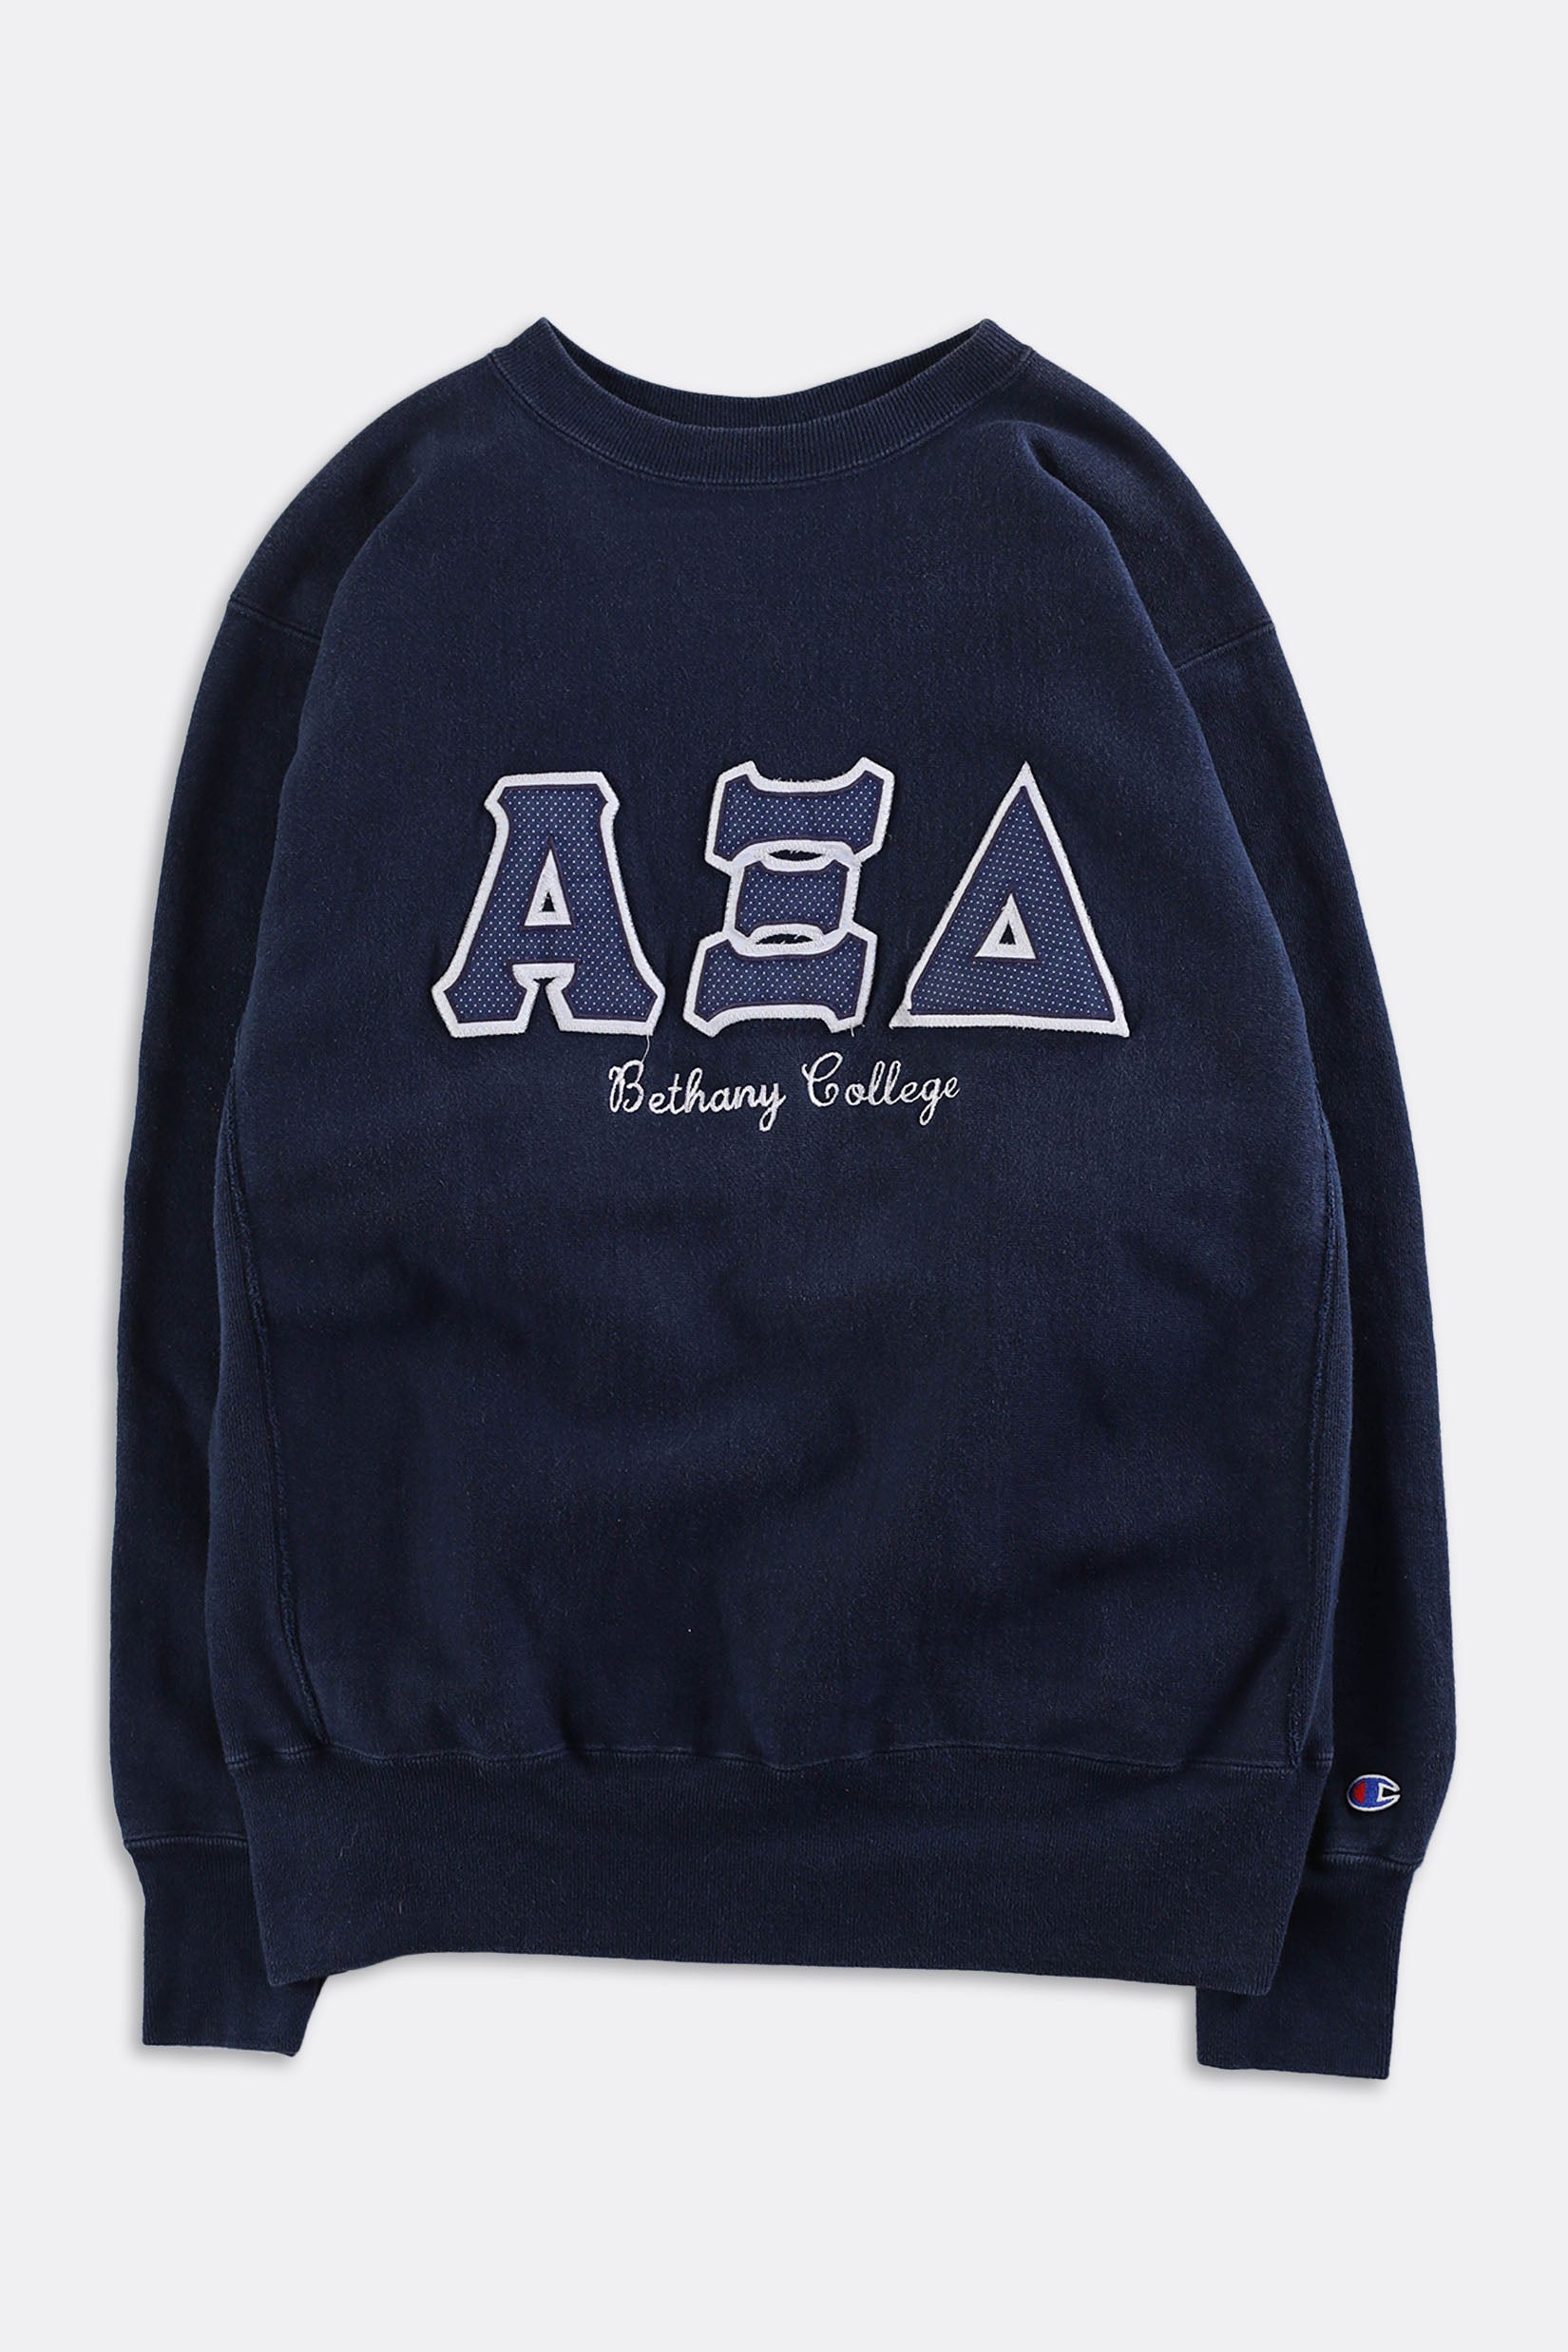 Vintage 90s Champion Bethany College Reverse Weave Sweatshirt